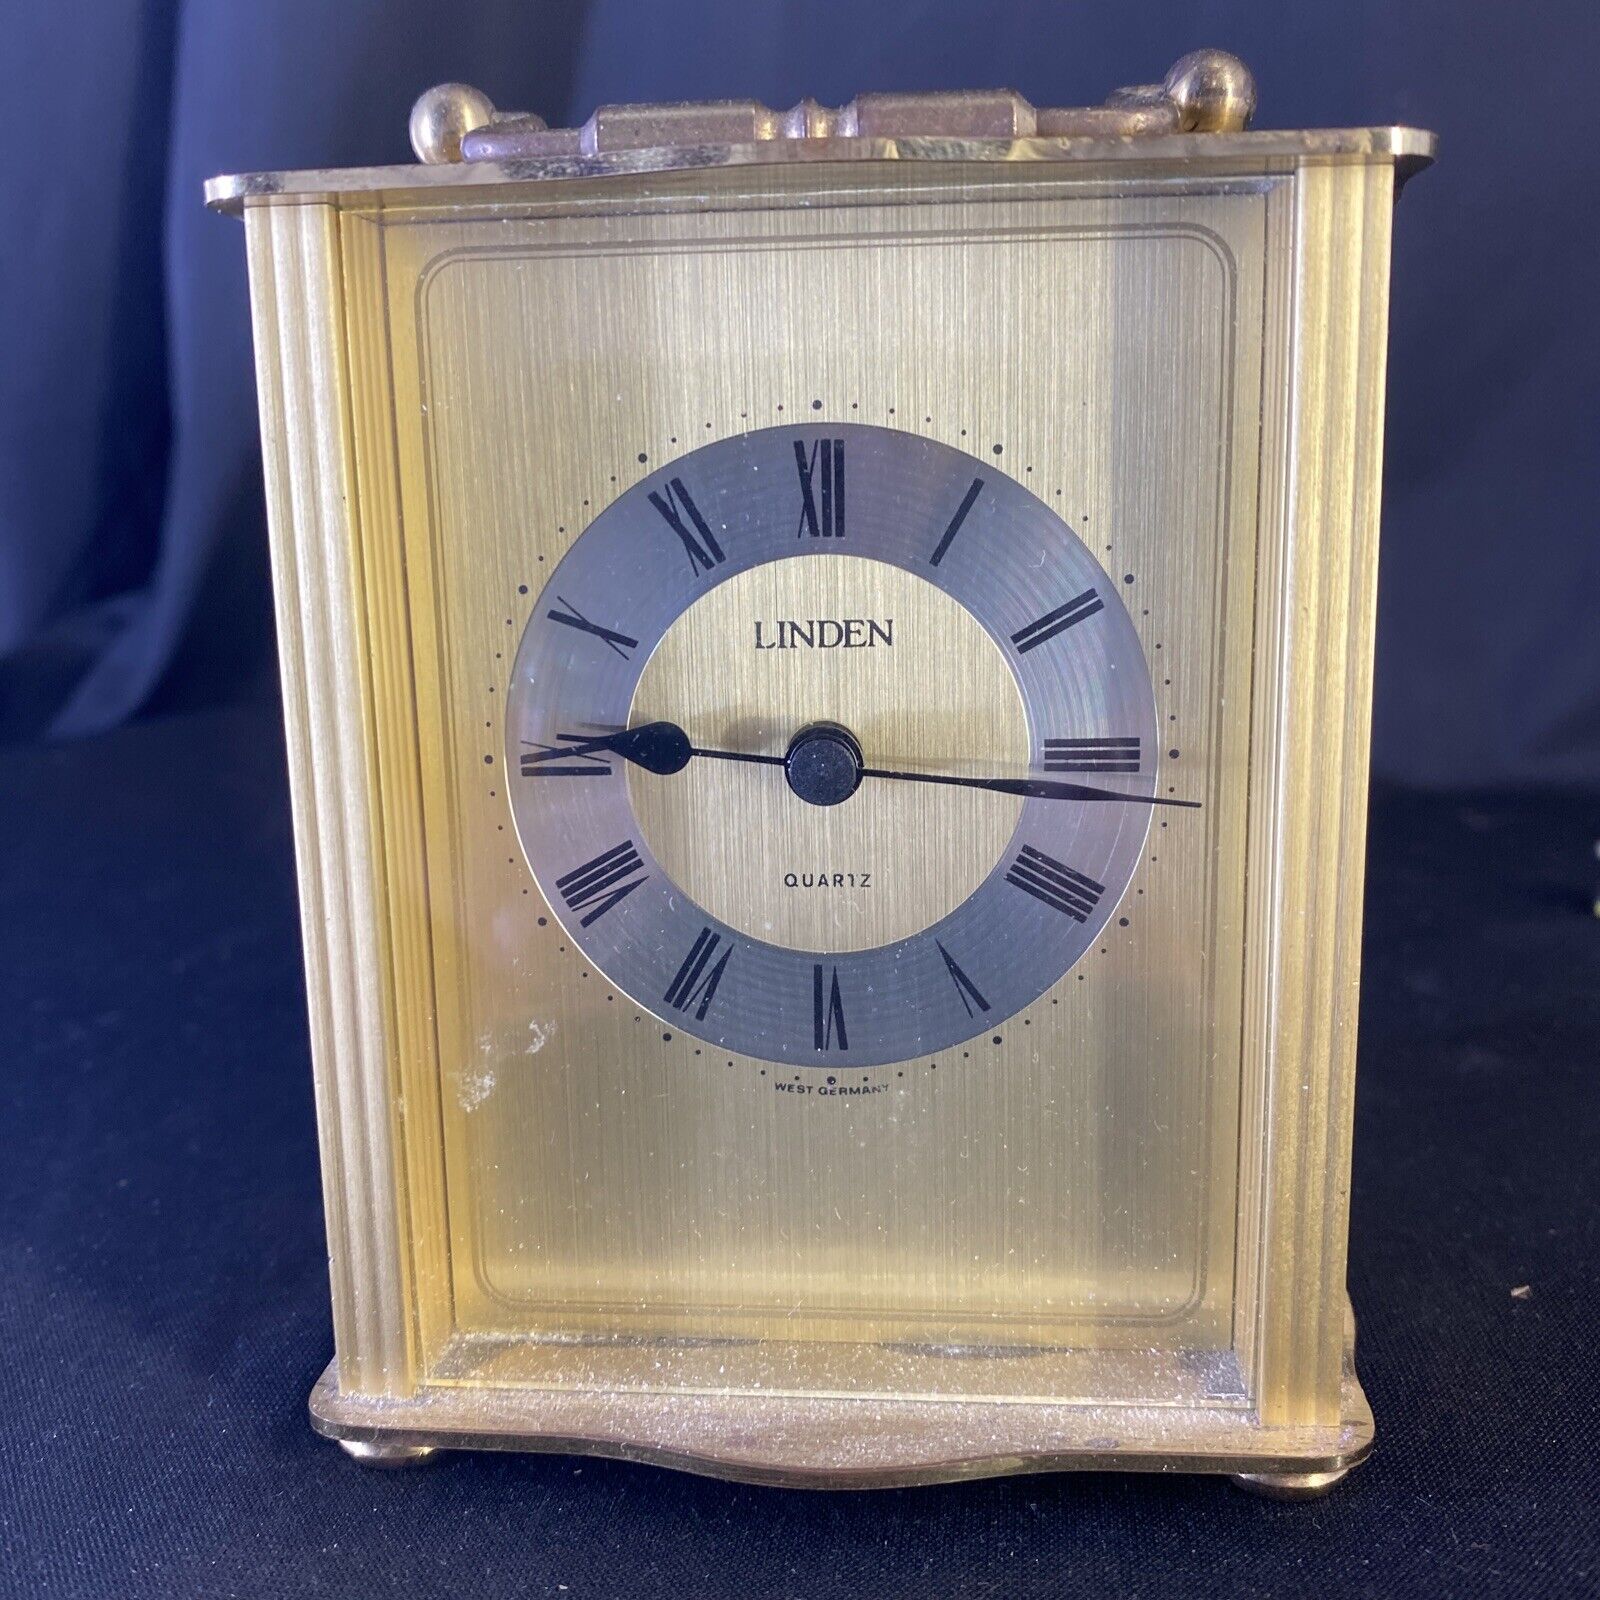 Linden Quartz Alarm Desk Clock 3x4 Japan Brass